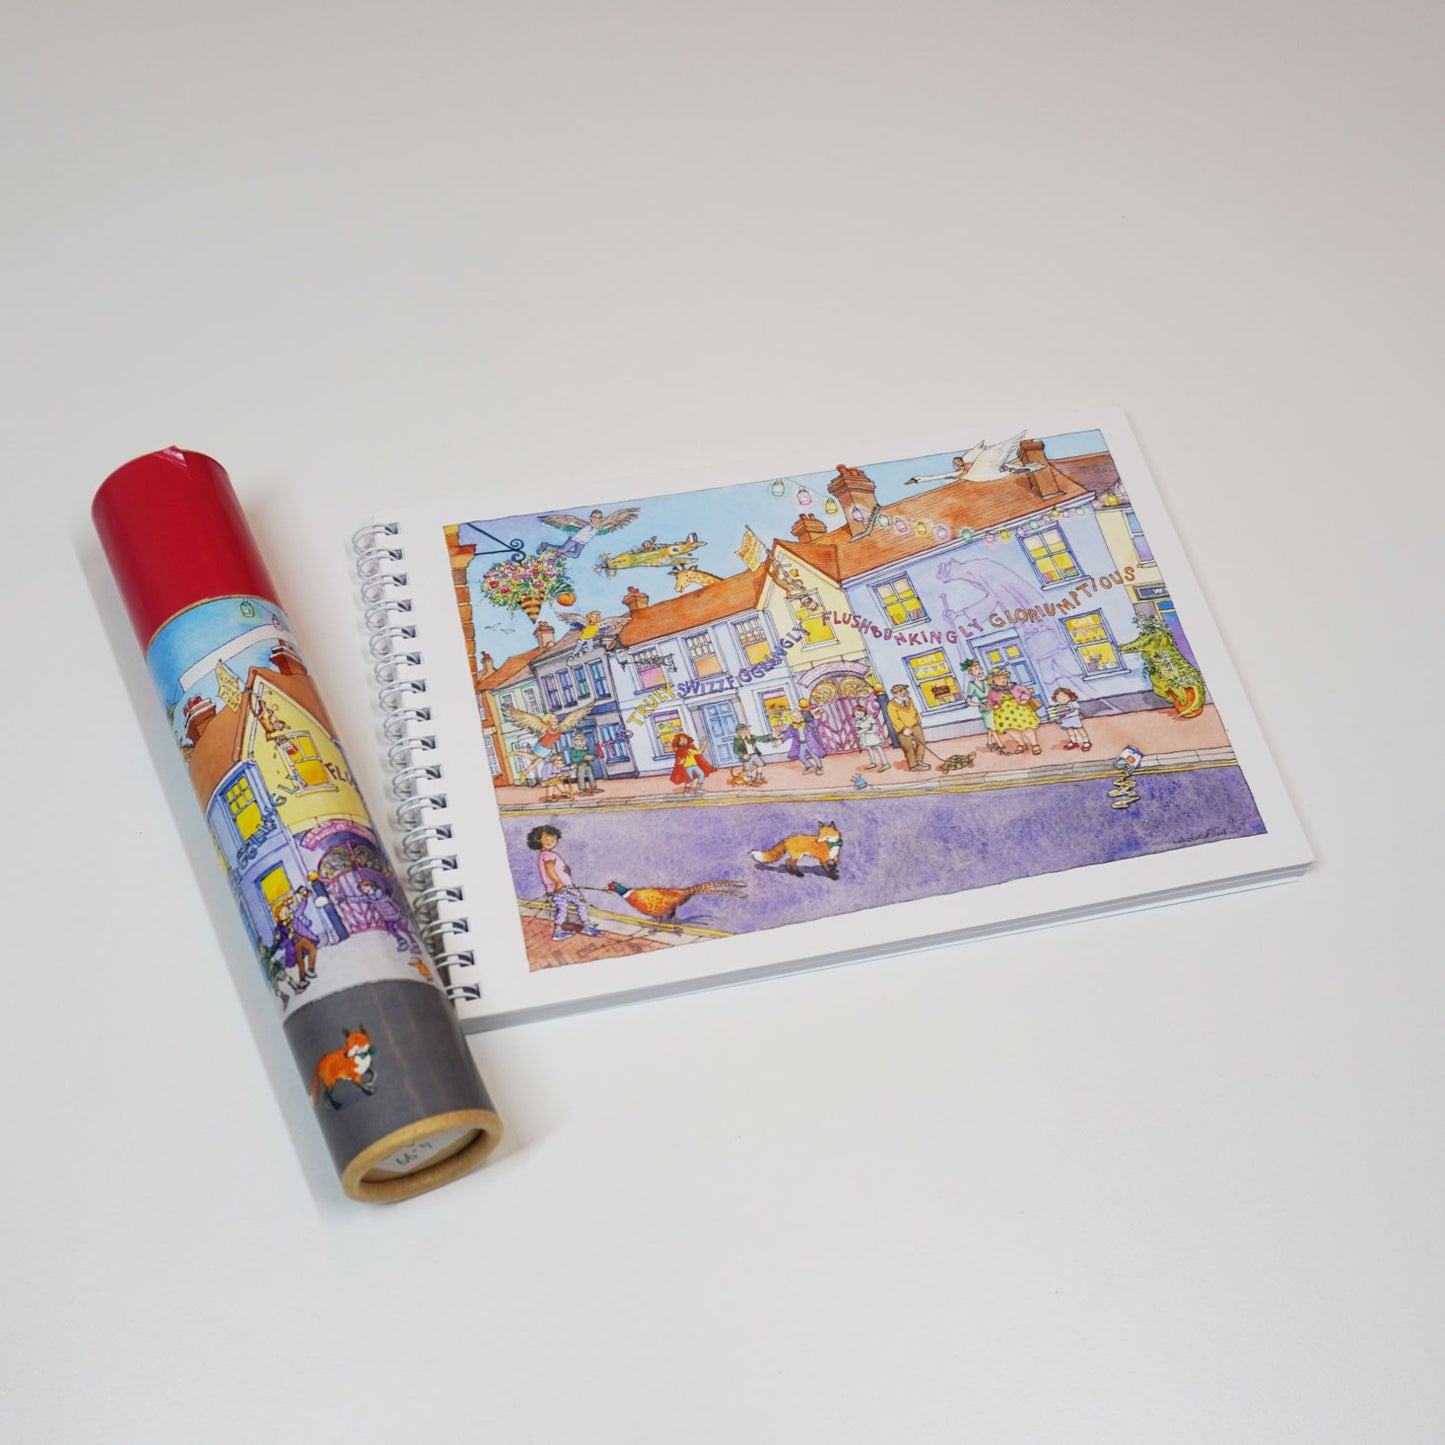 Roald Dahl Museum colouring pencils set with matching notepad